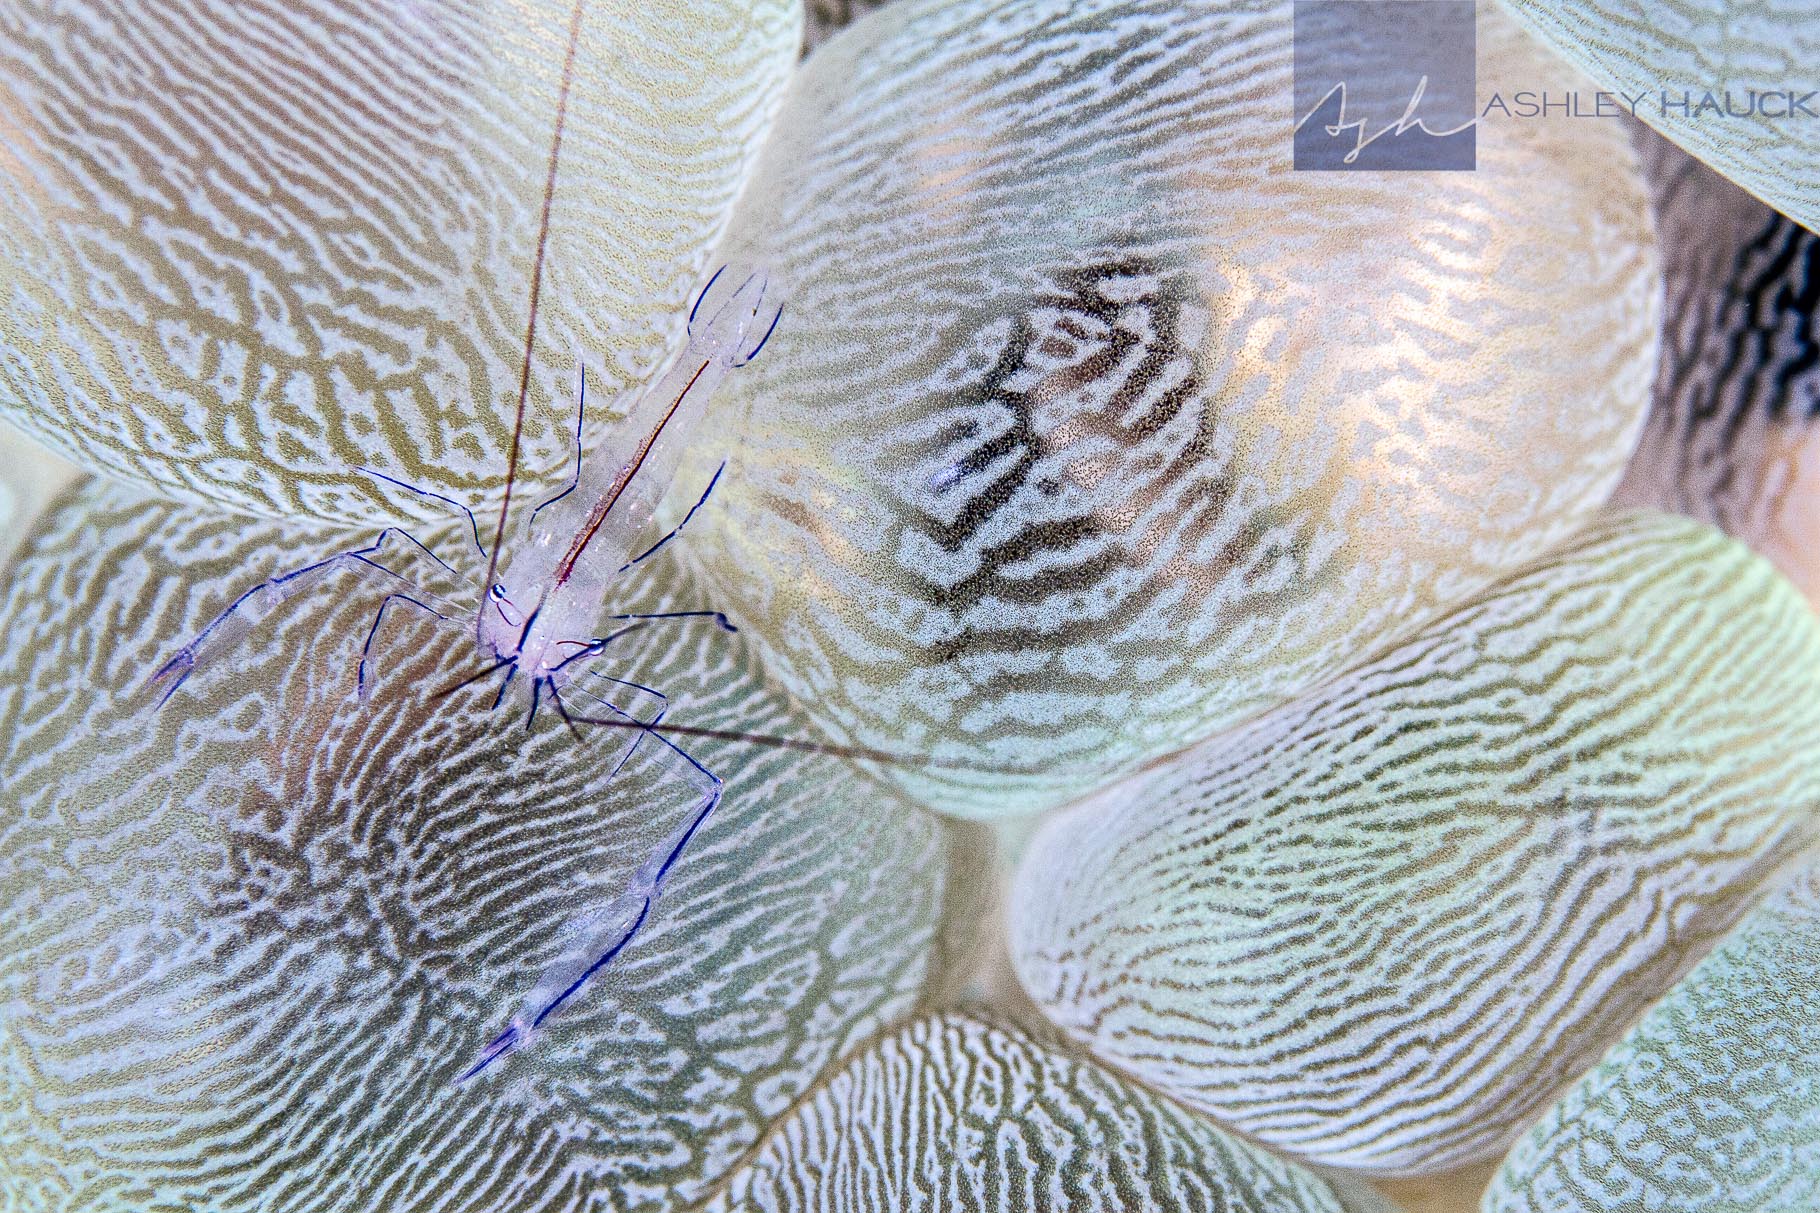 Anilao, Batangas, Philippines: Bubble coral shrimp